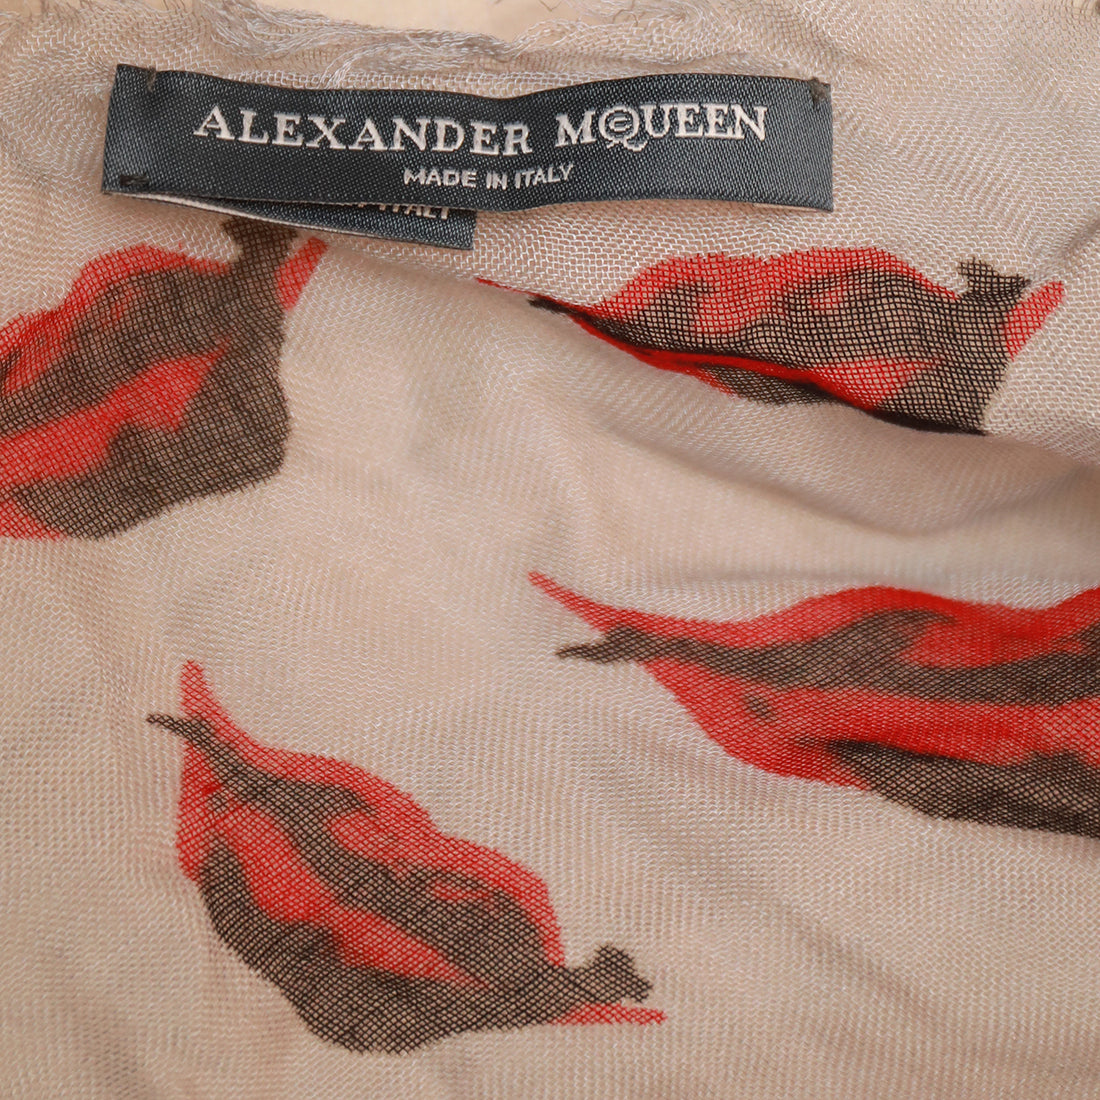 Alexander McQueen Lips print scarf